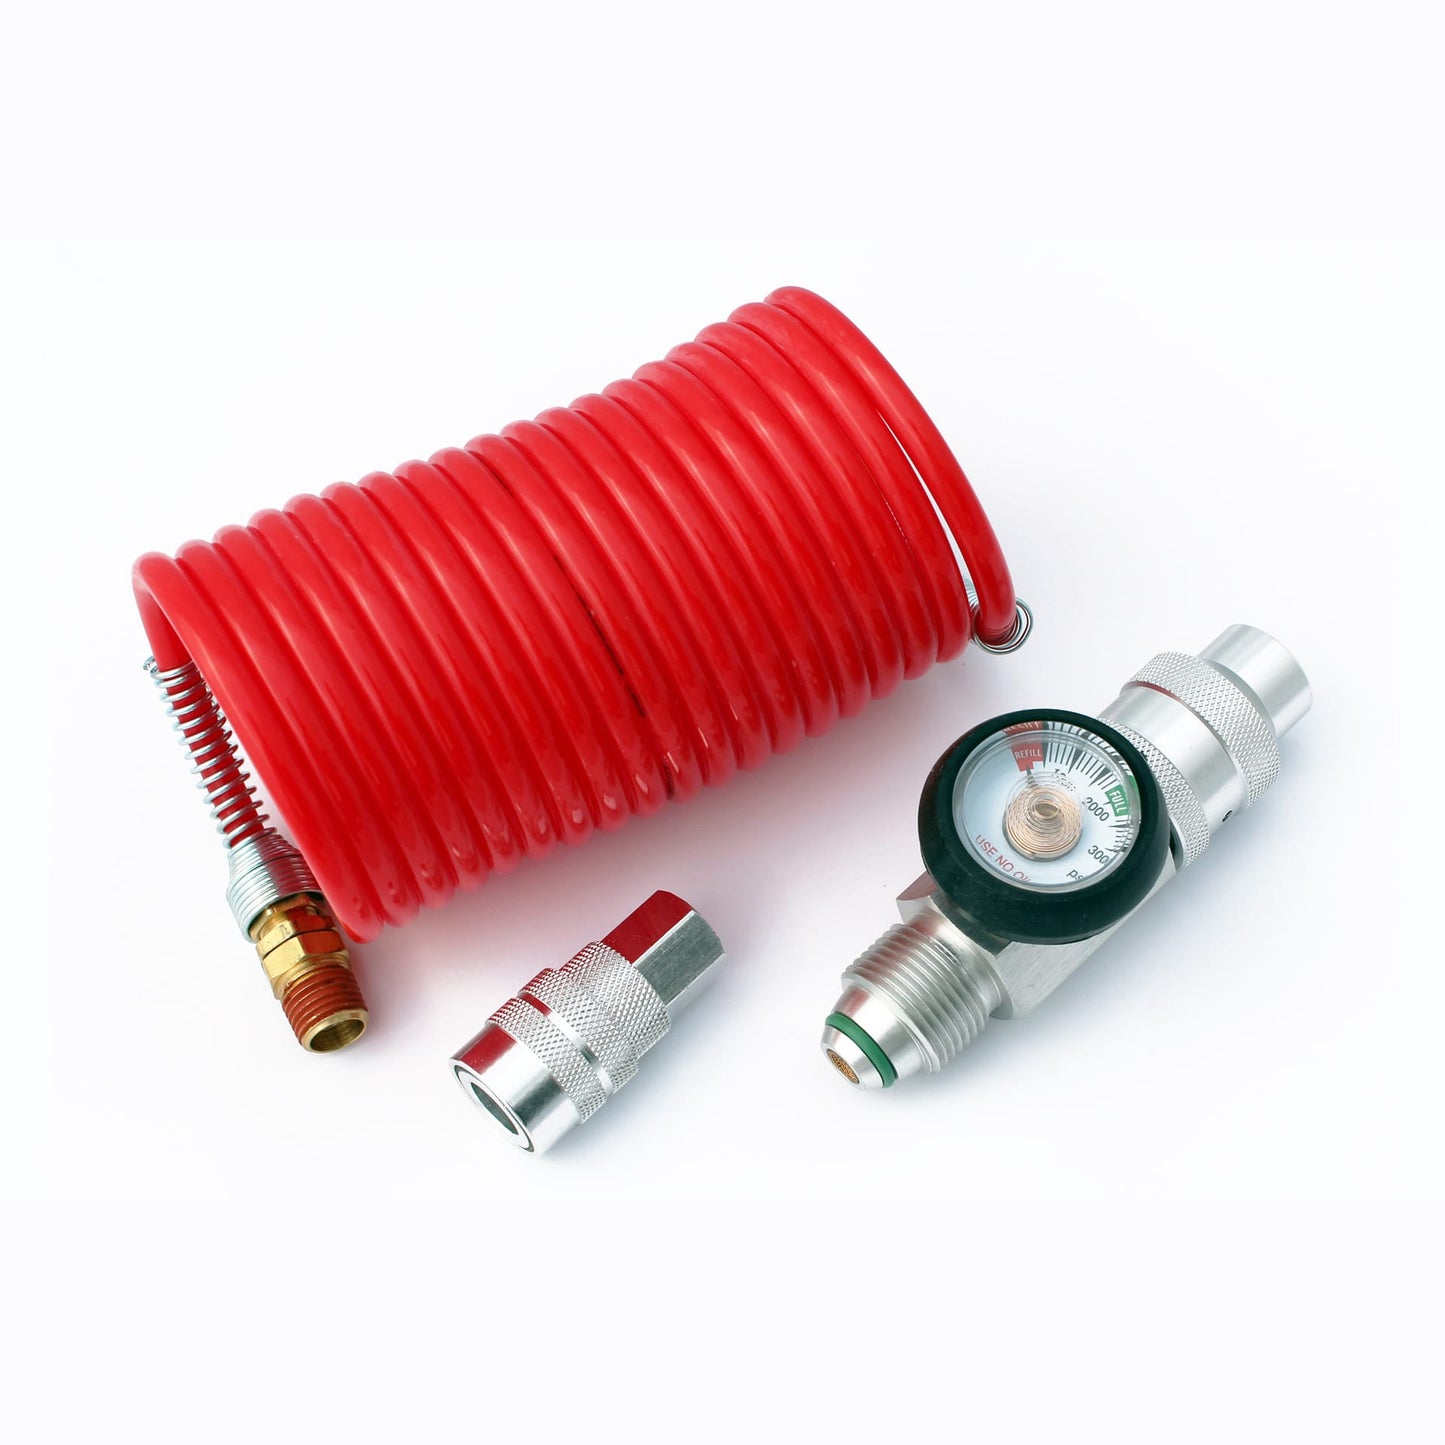 Nitrogen kit with red hose